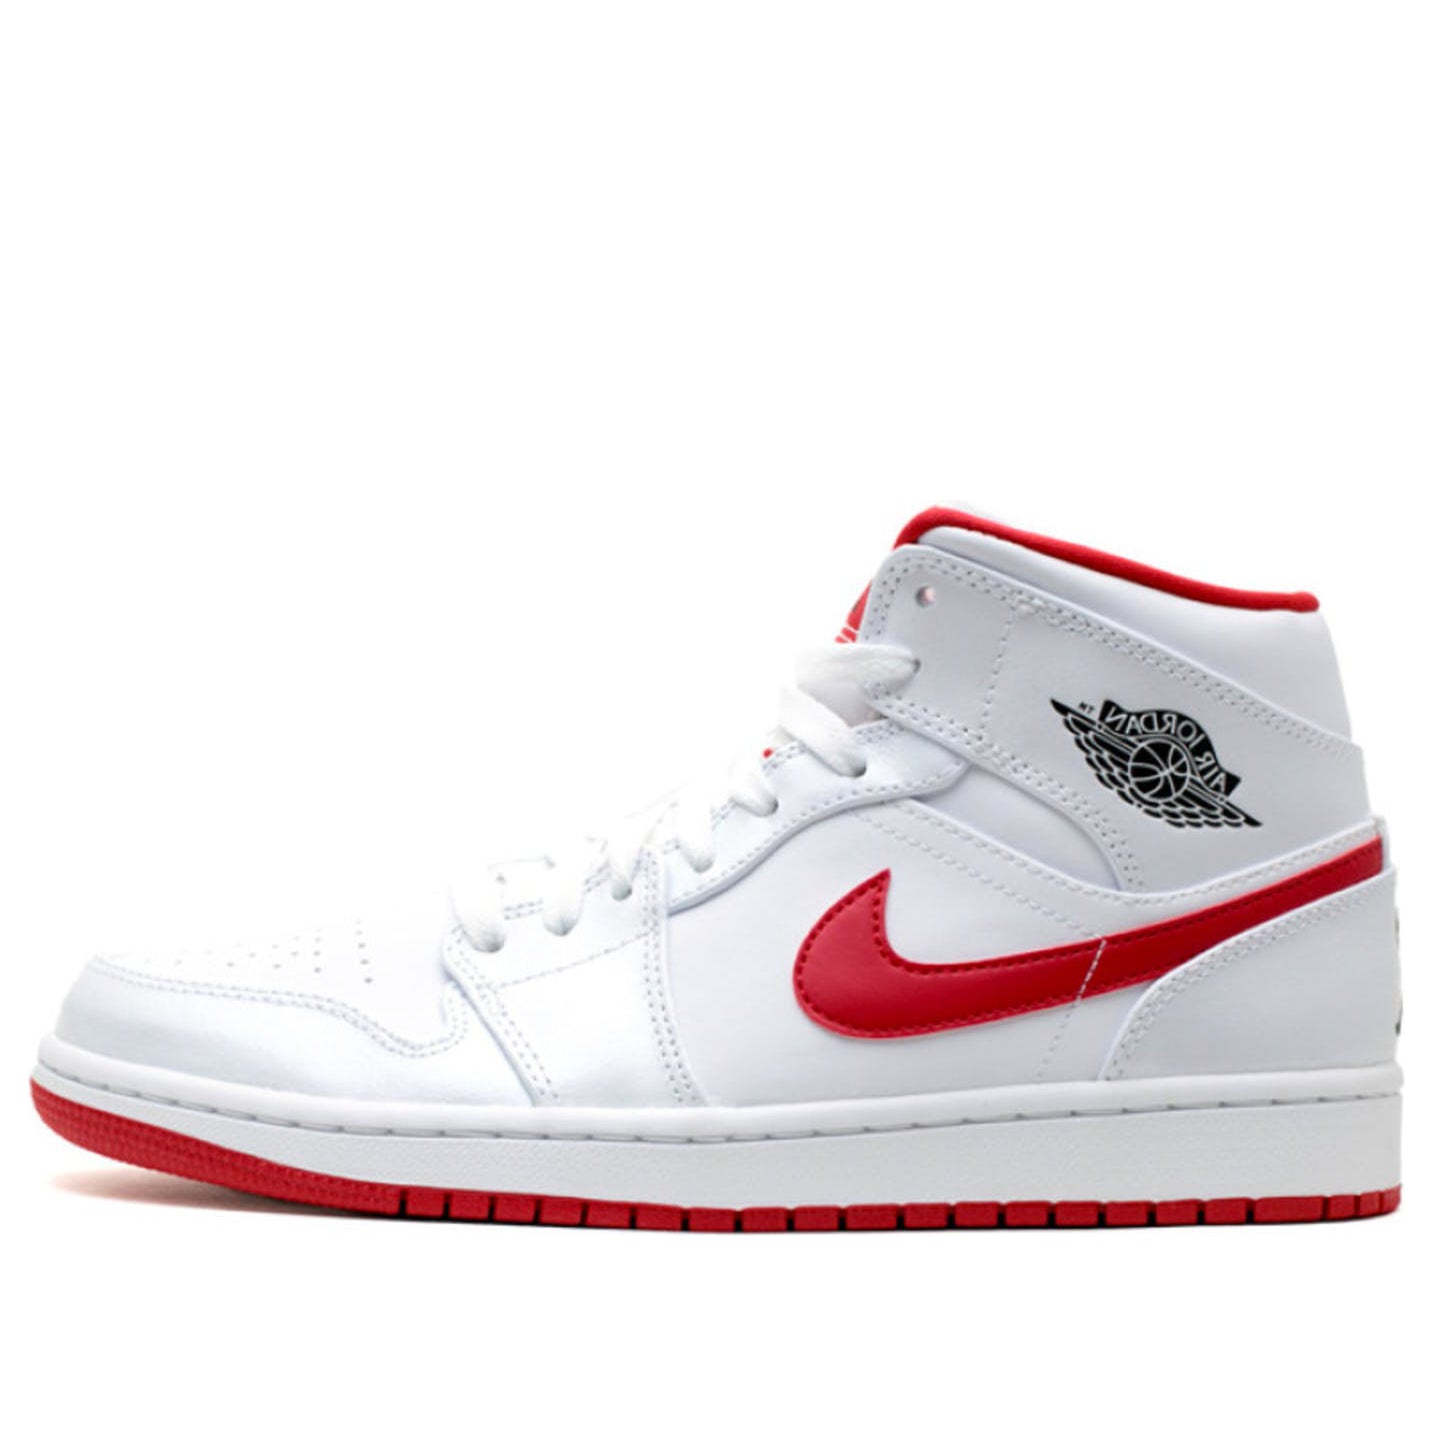 Air Jordan 1 Mid 'White Gym Red' White/Black-Gym Red 554724-101